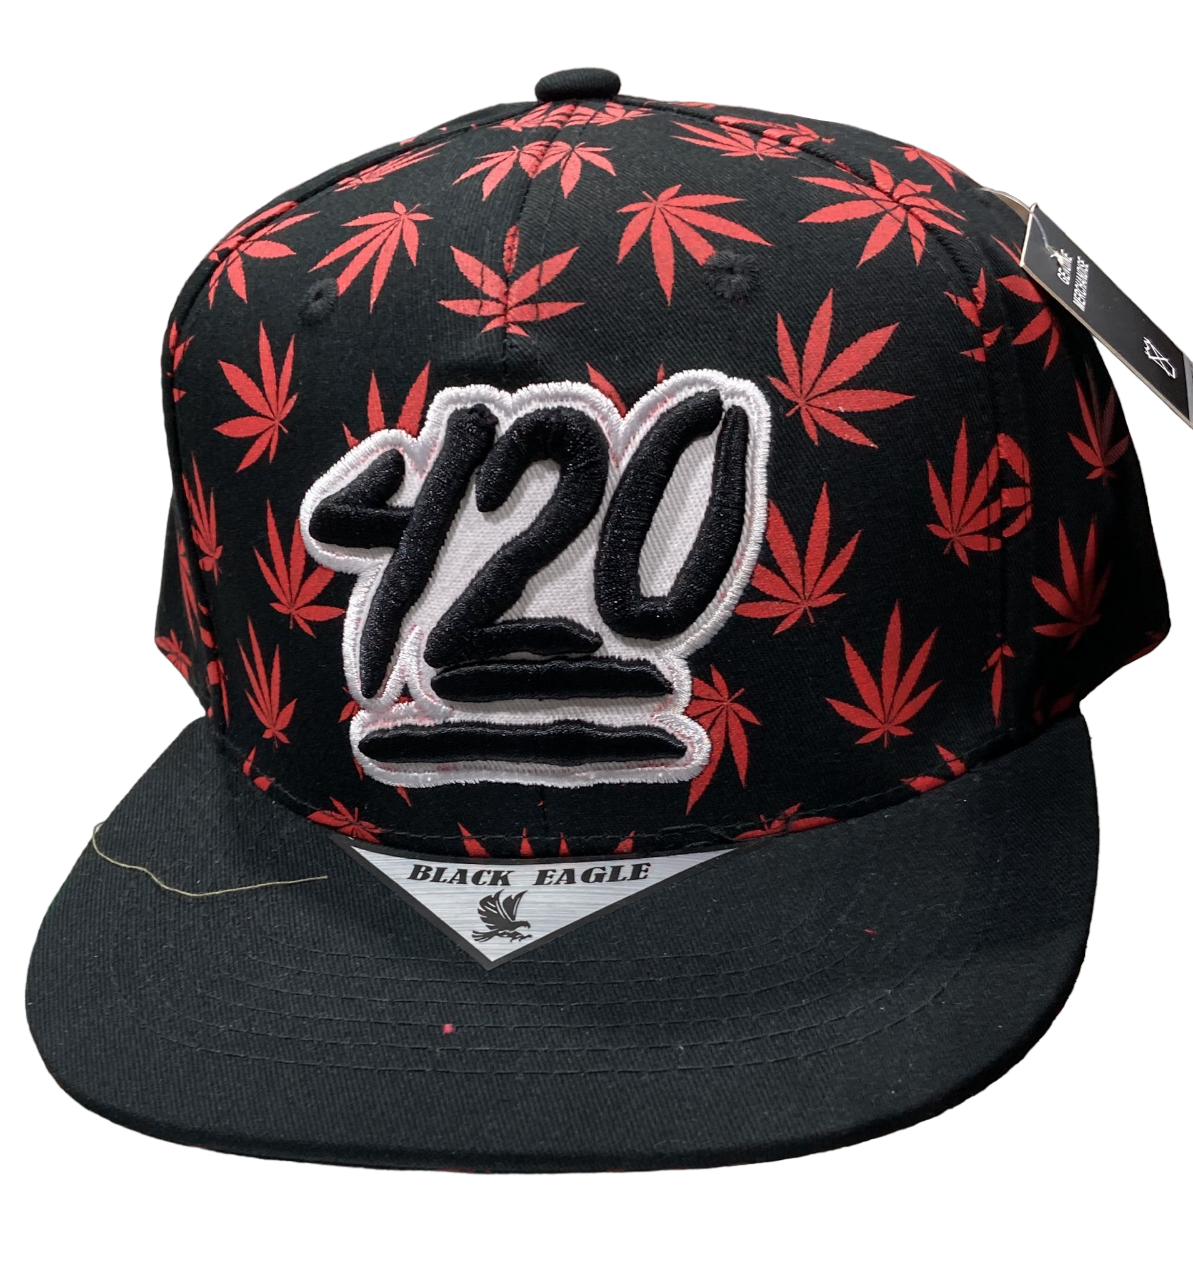 Adjustable Baseball Hat - 420 Marijuana Printed (Black/Peach) - MK Distro